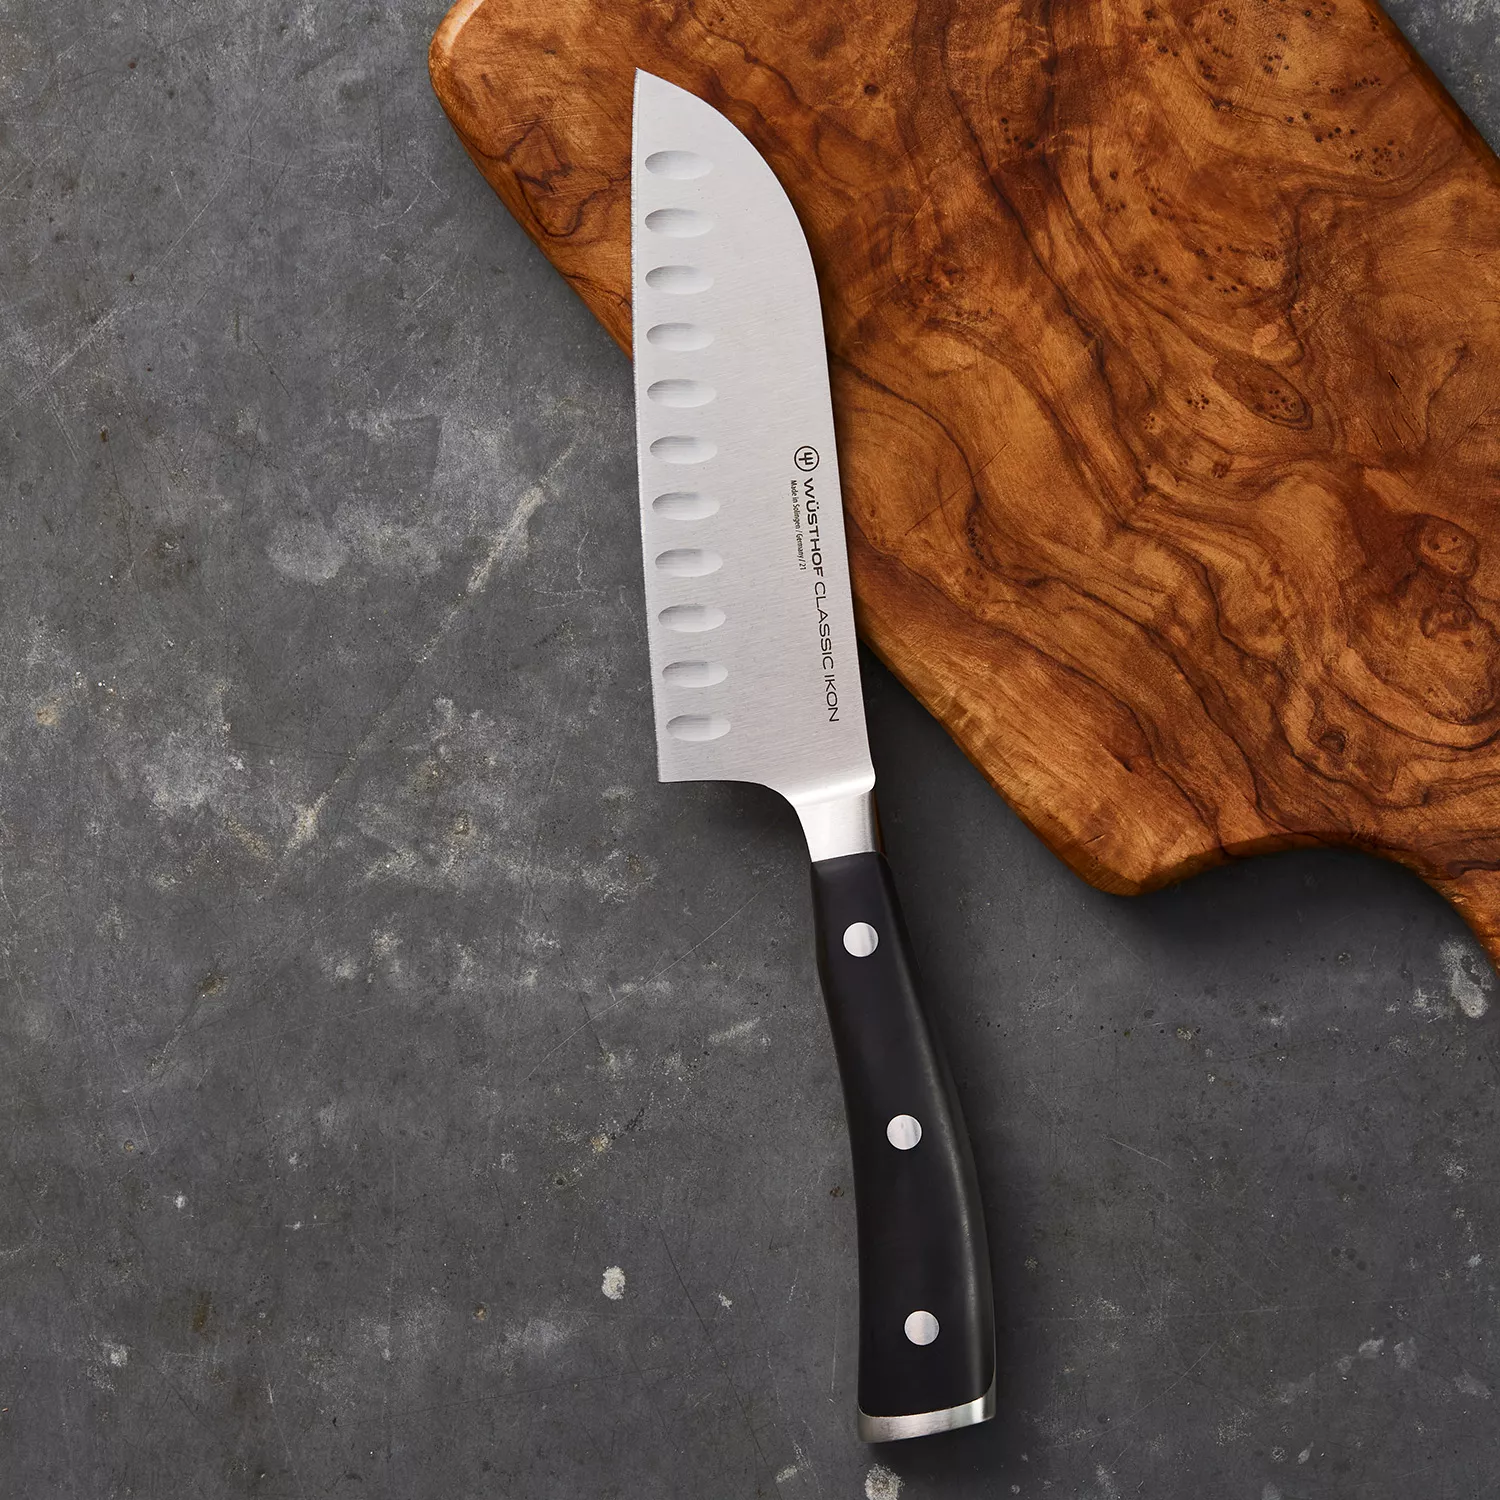 Wusthof Classic Ikon 9 Carving Knife, Hollow Edge